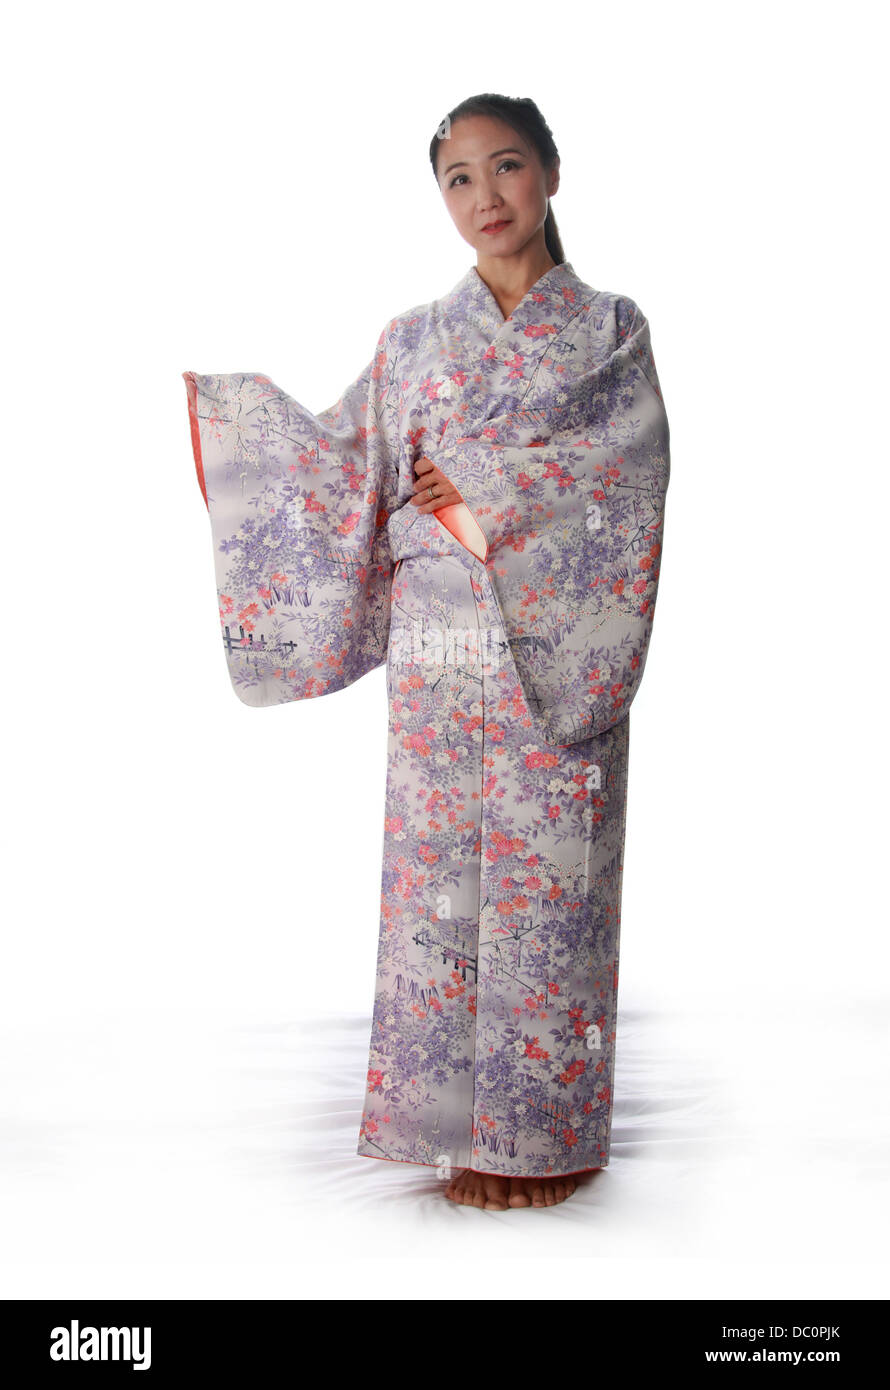 Japanese Lady Wearing a Pink and Lilac Patterned Kimono Stock Photo